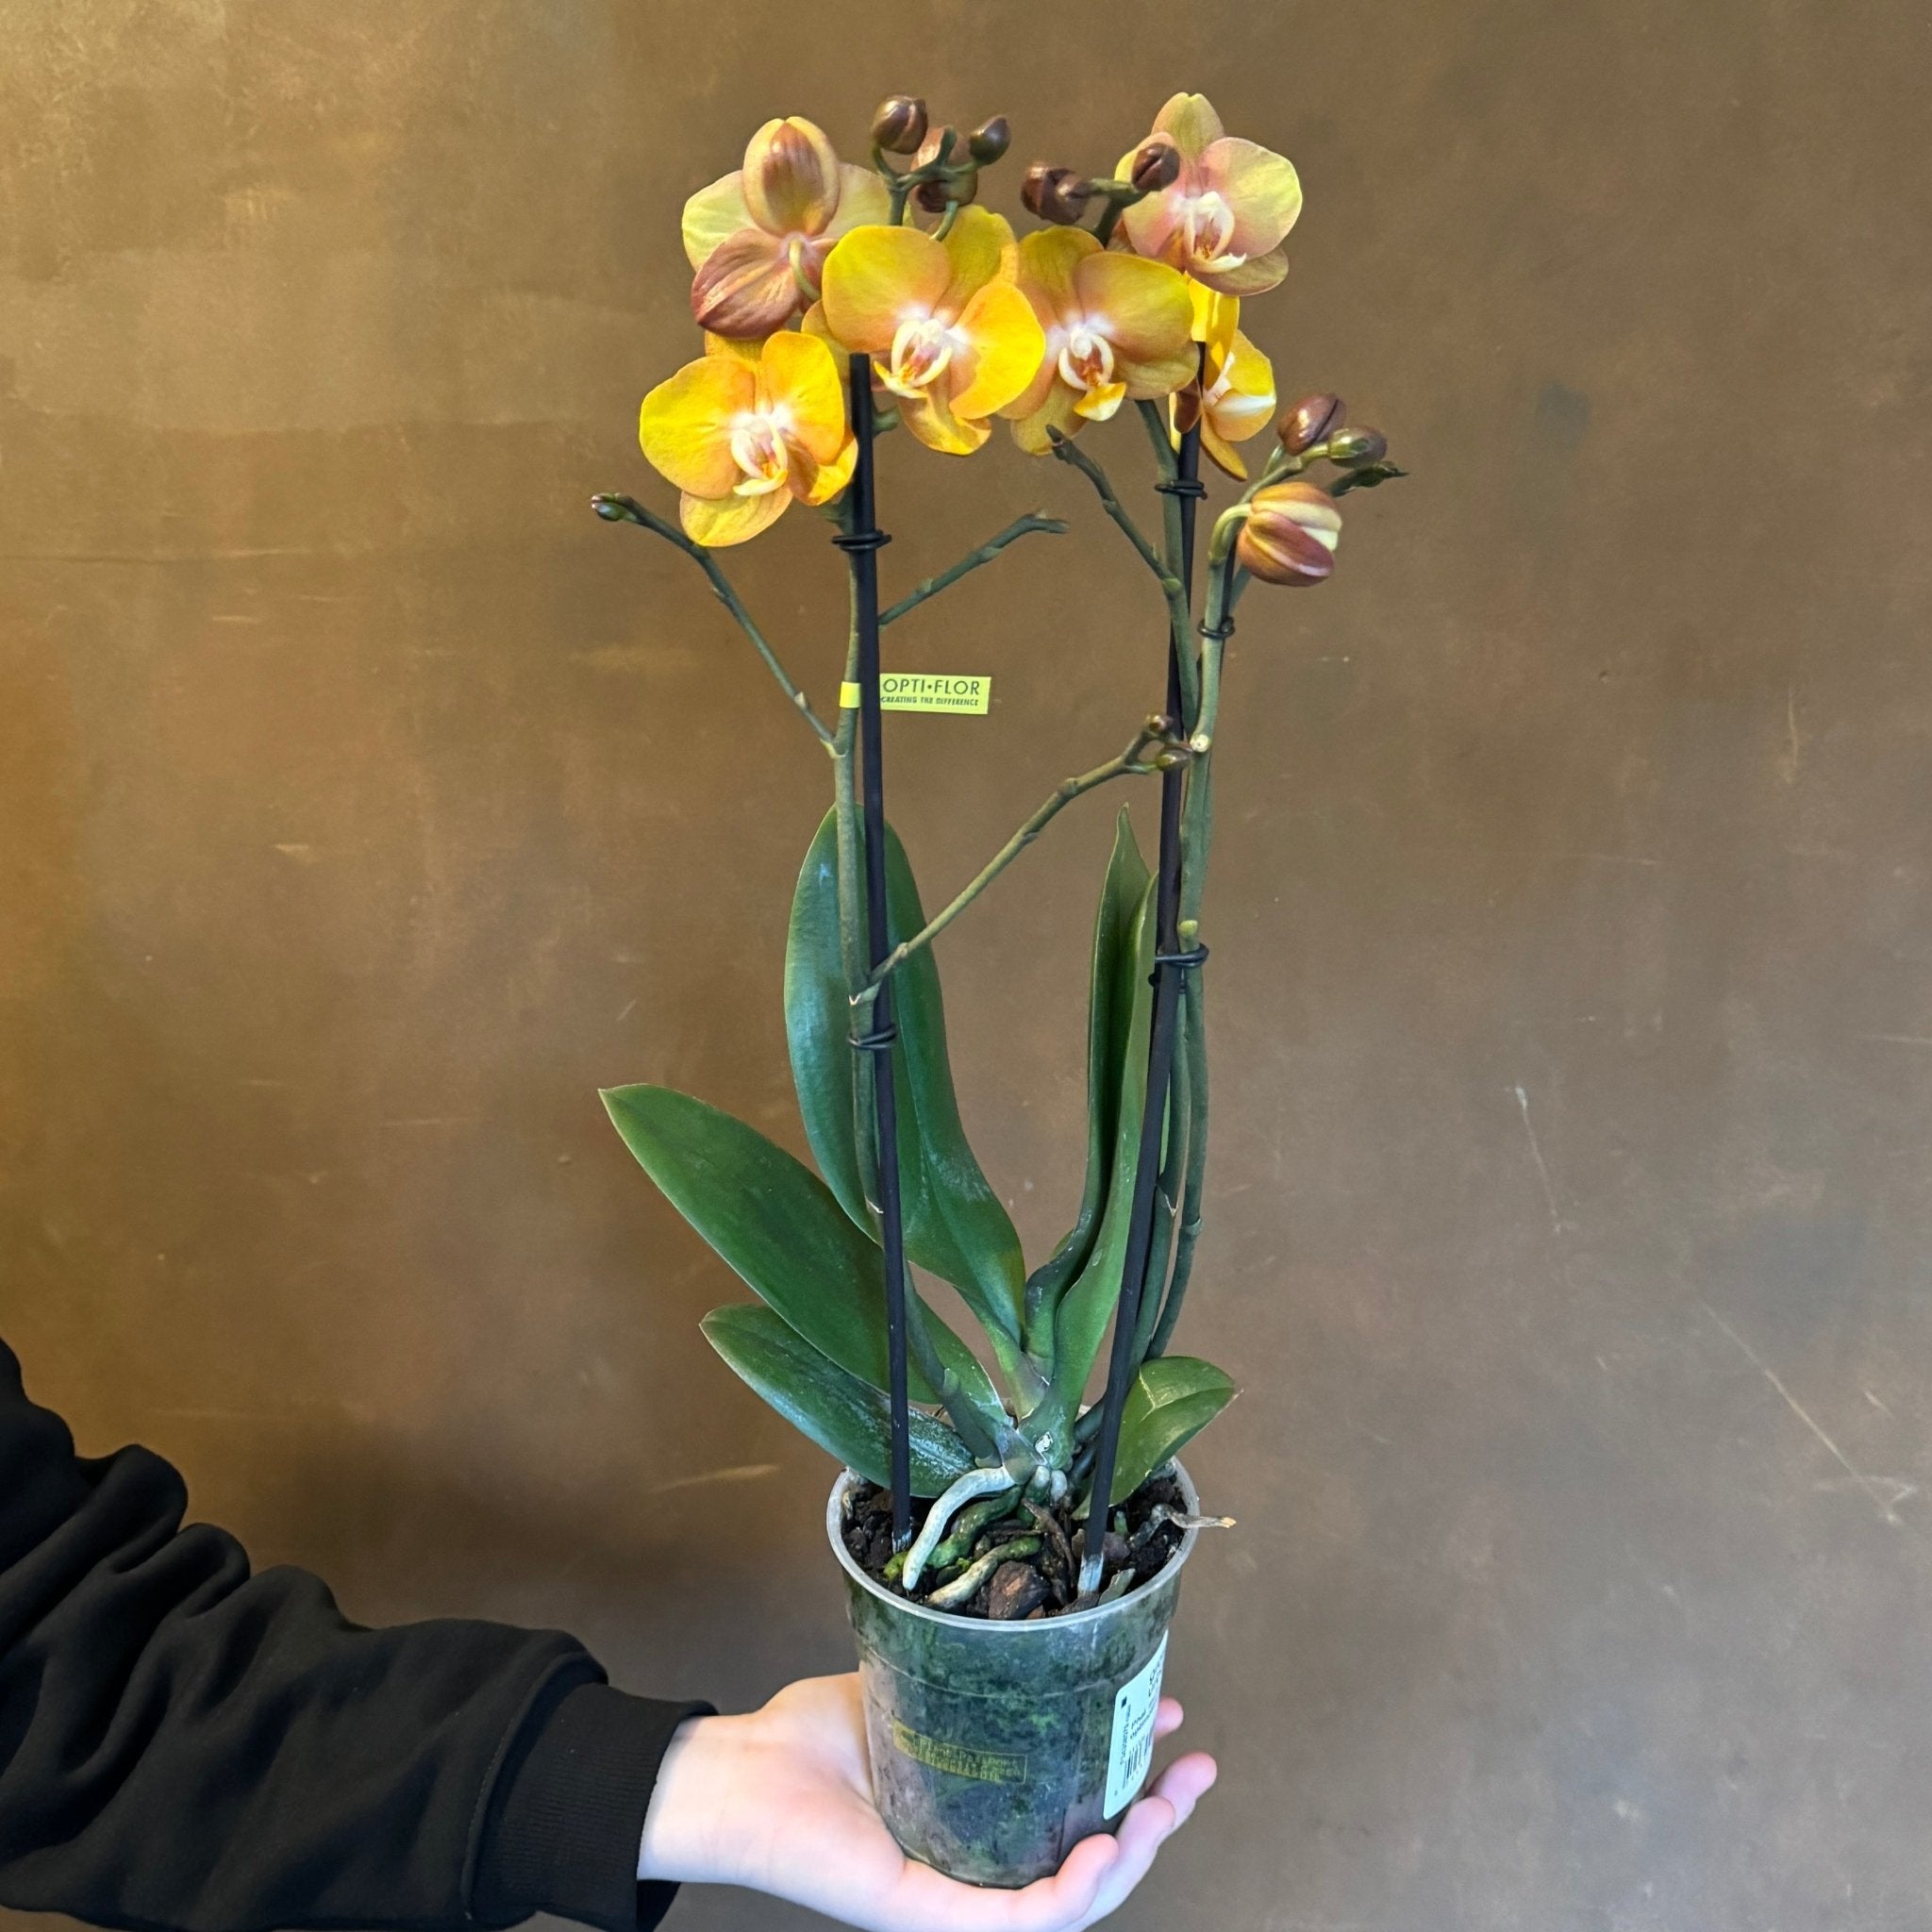 Phalaenopsis ‘Optimost’ (lucky dip) - grow urban. UK